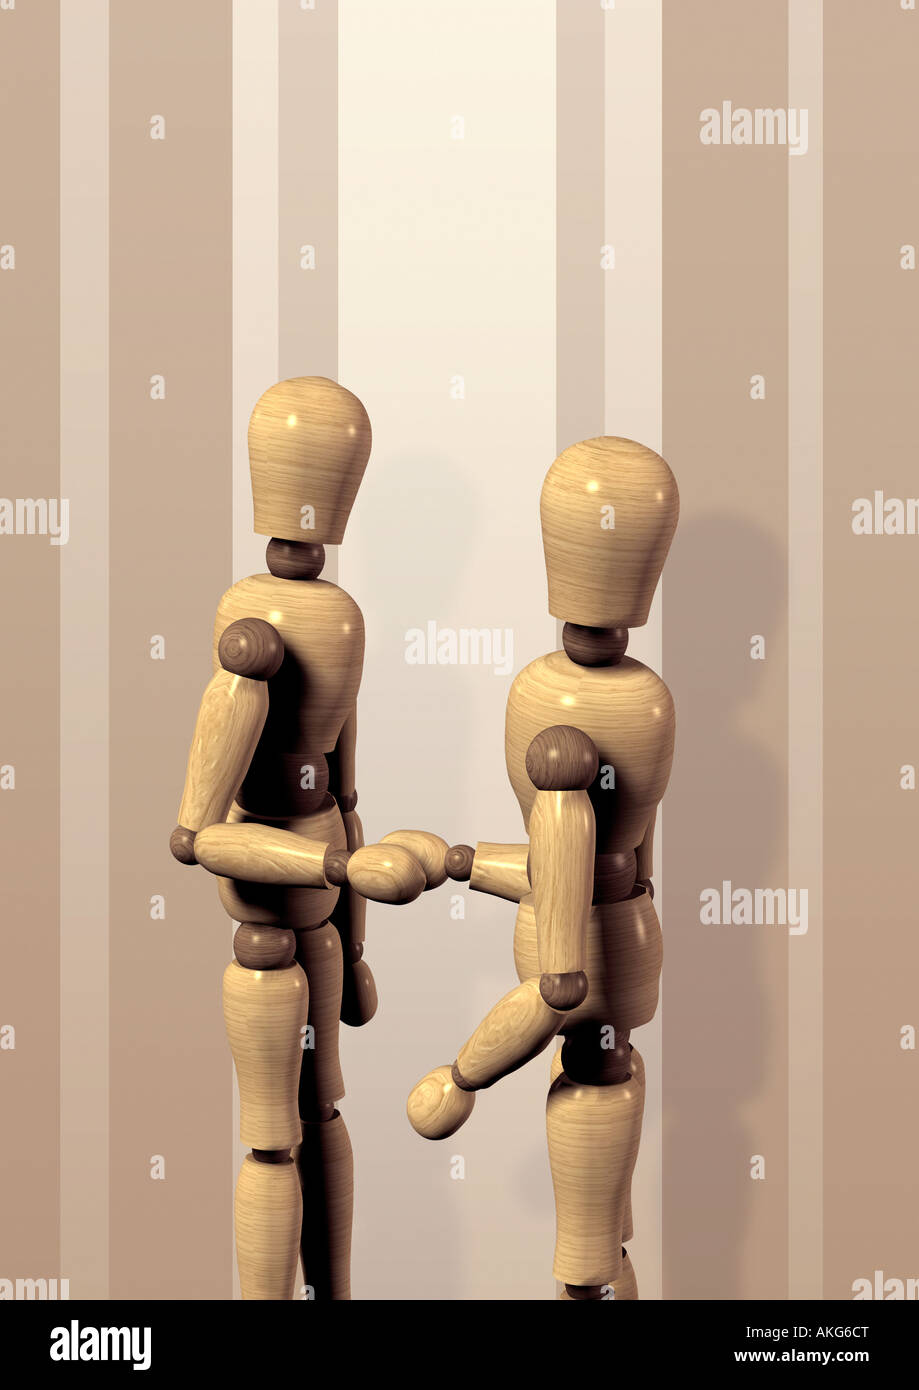 Un apretón de manos, muñecas articulados Gliederpuppen beim Handshake Foto de stock